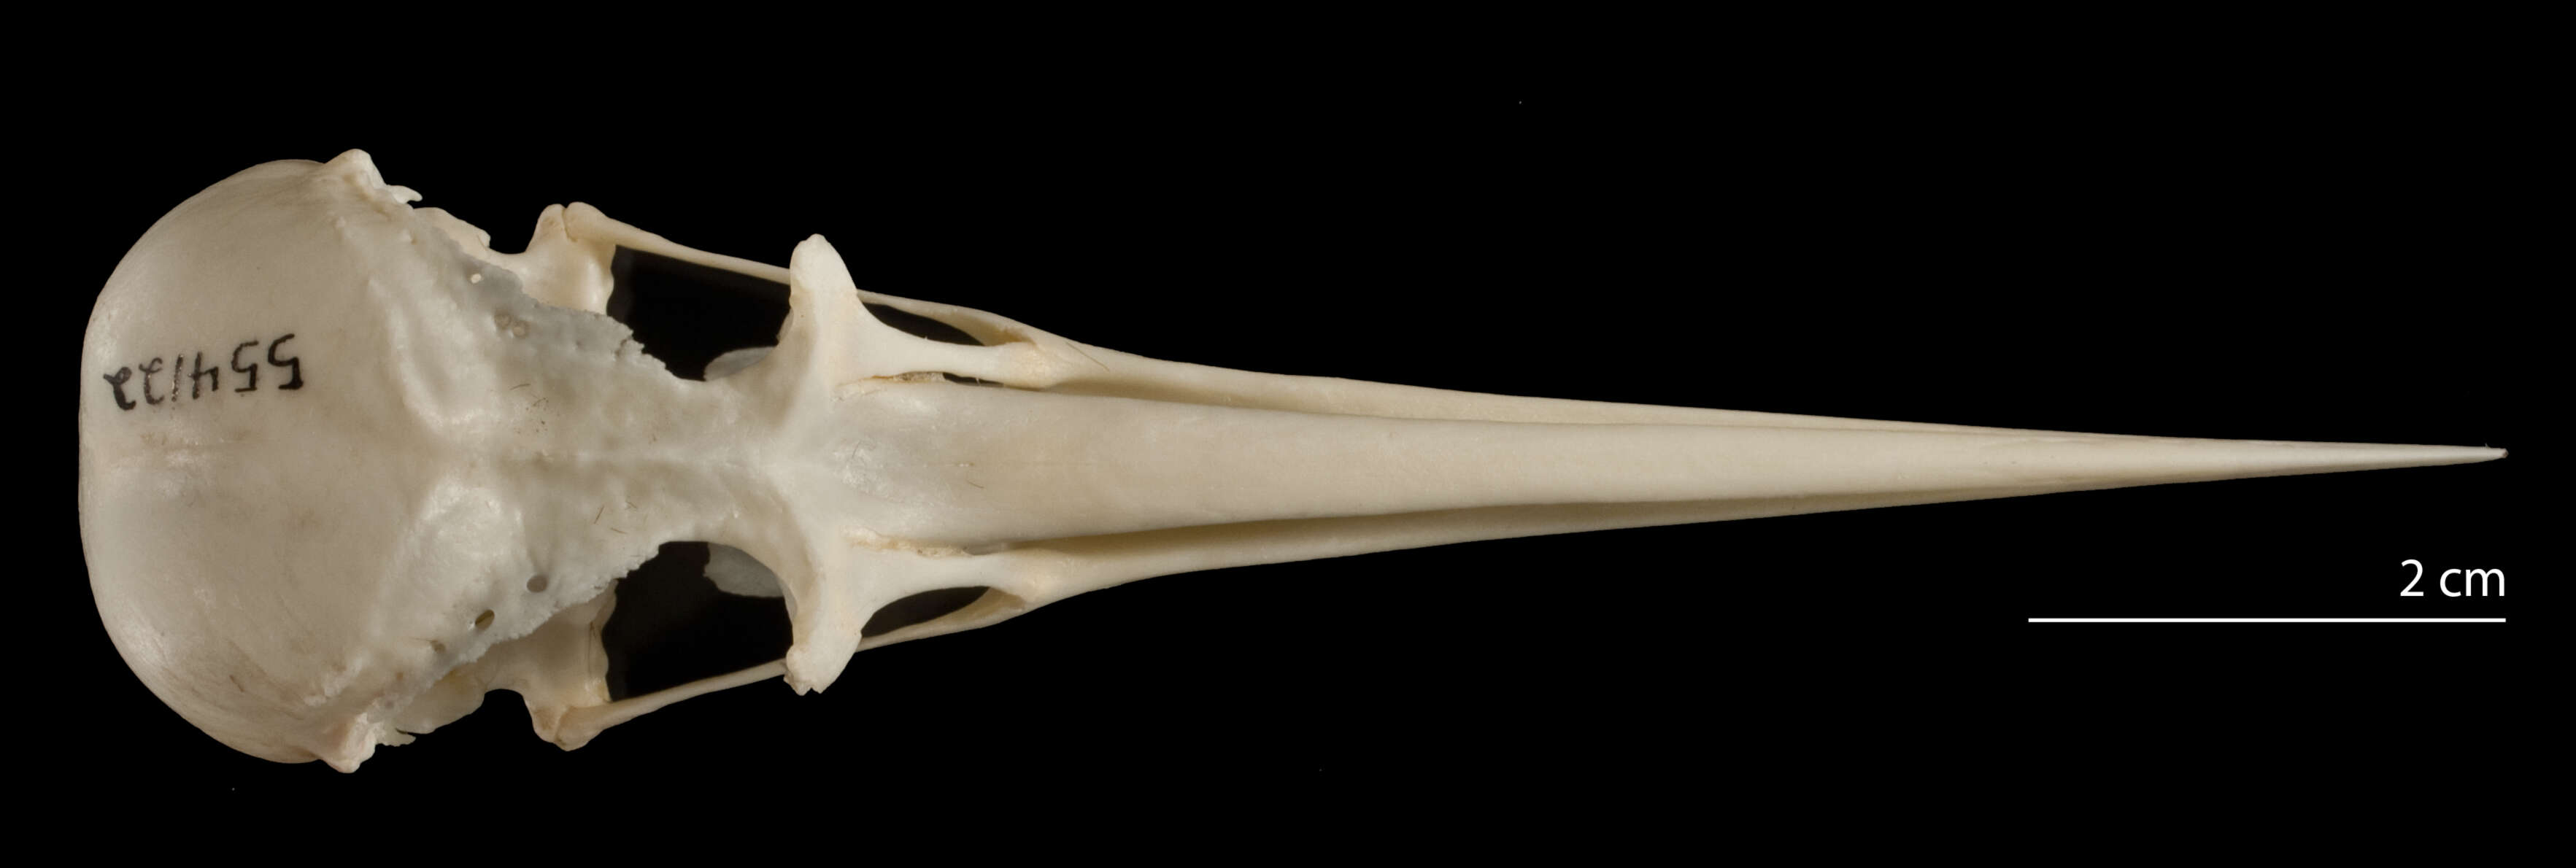 Image of oystercatcher, eurasian oystercatcher